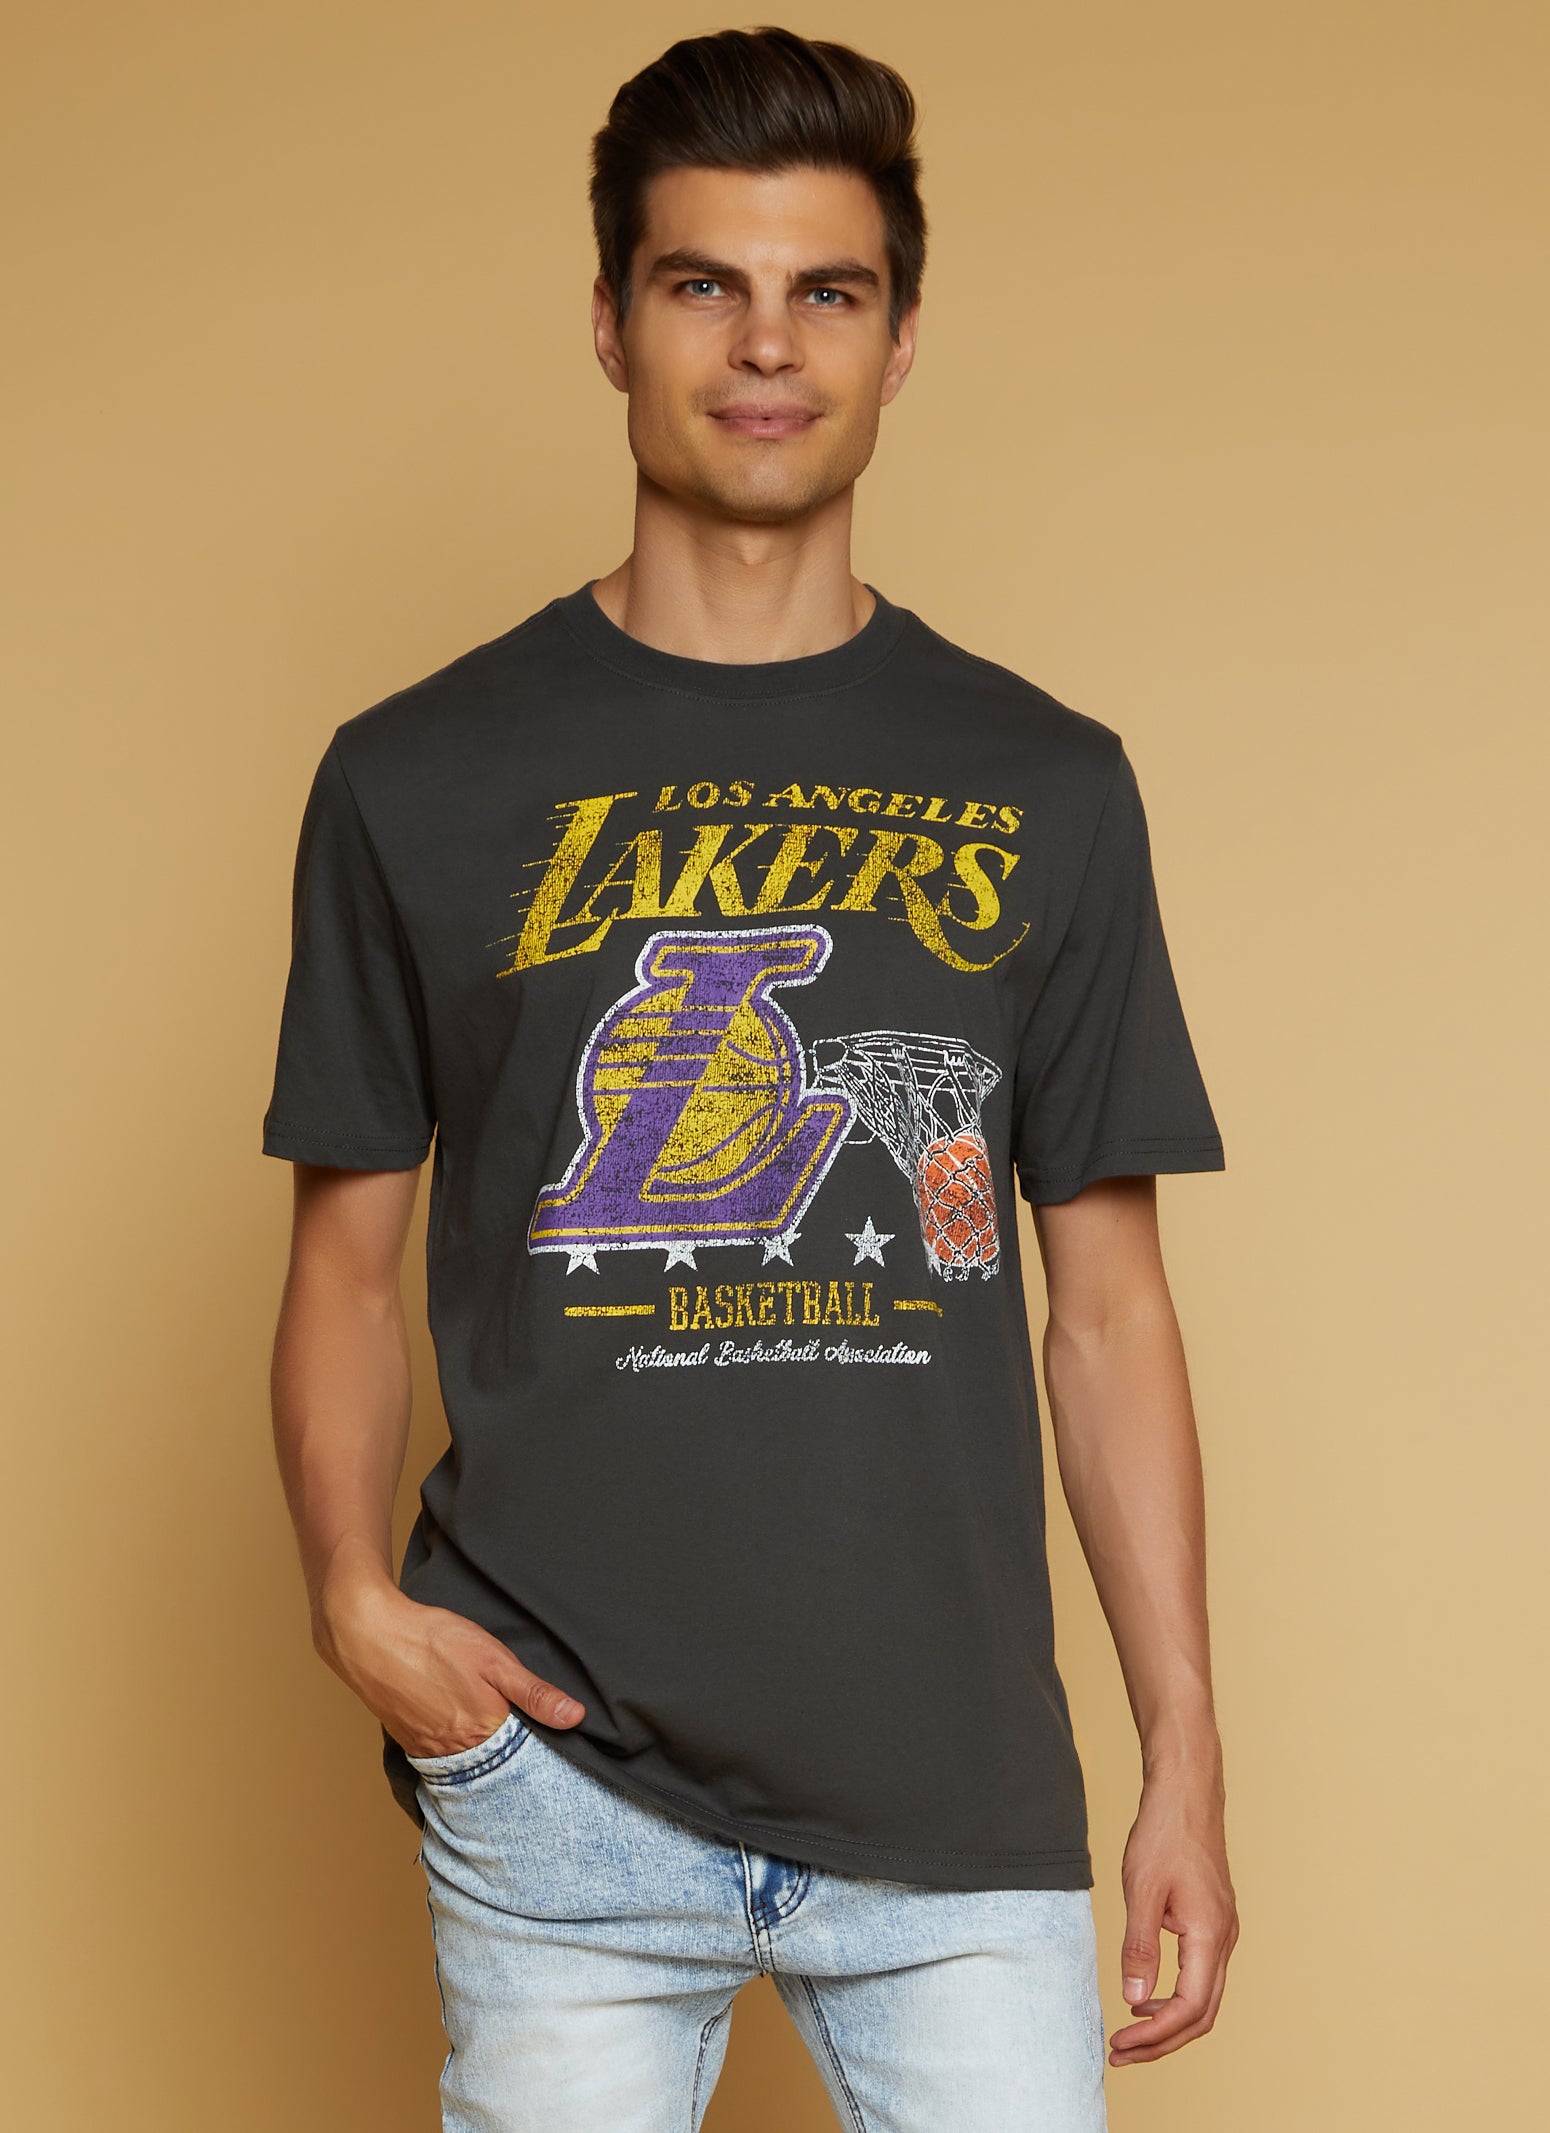 Womens Mens NBA Los Angeles Lakers Short Sleeve Graphic Tee, Black, Size XL